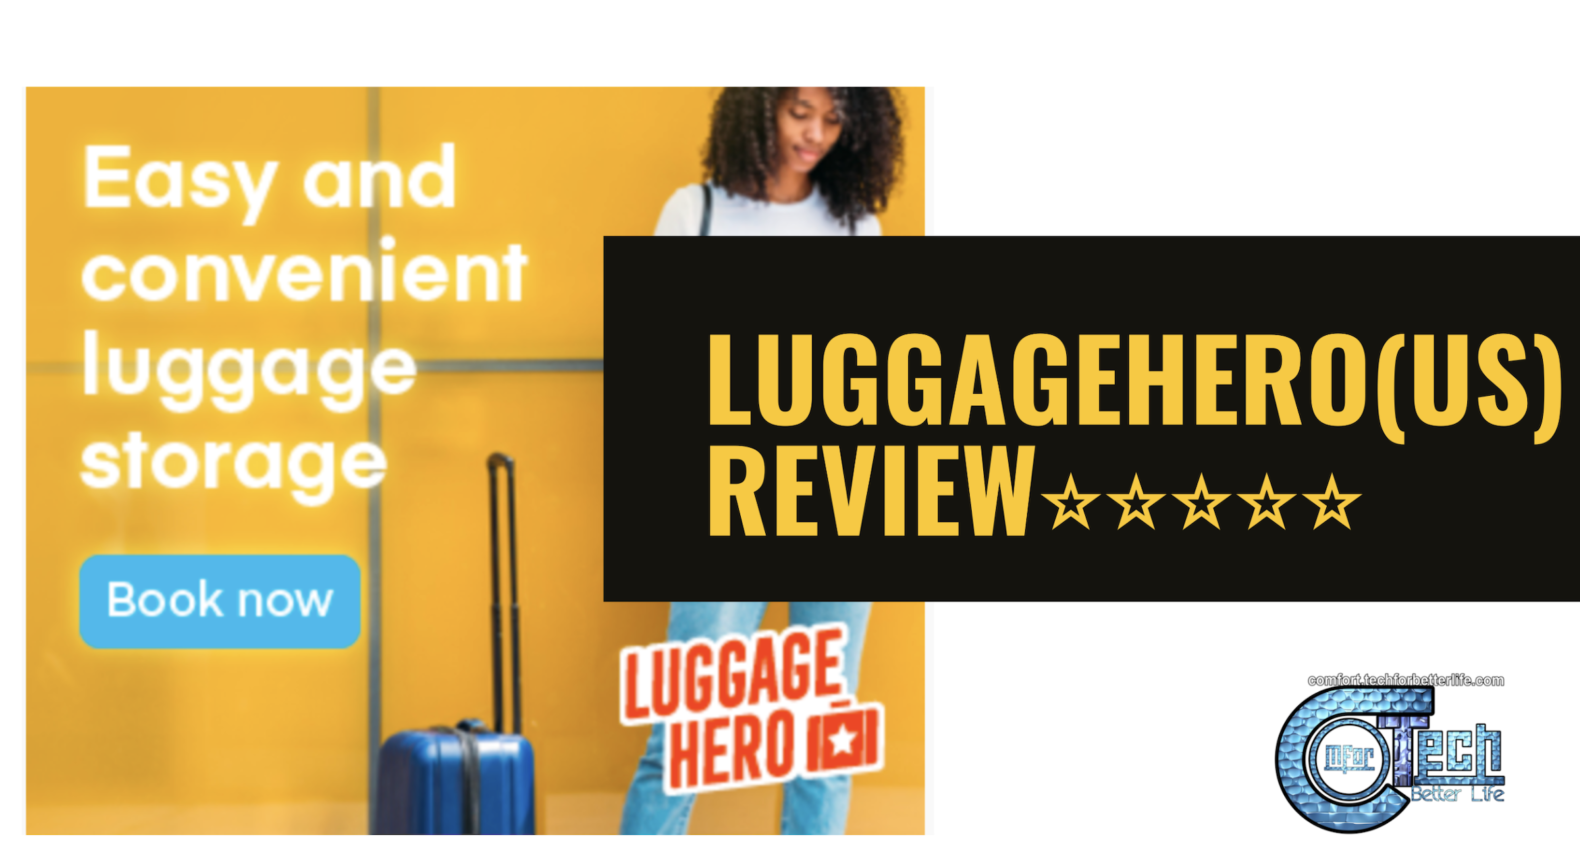 LuggageHero(US) Review